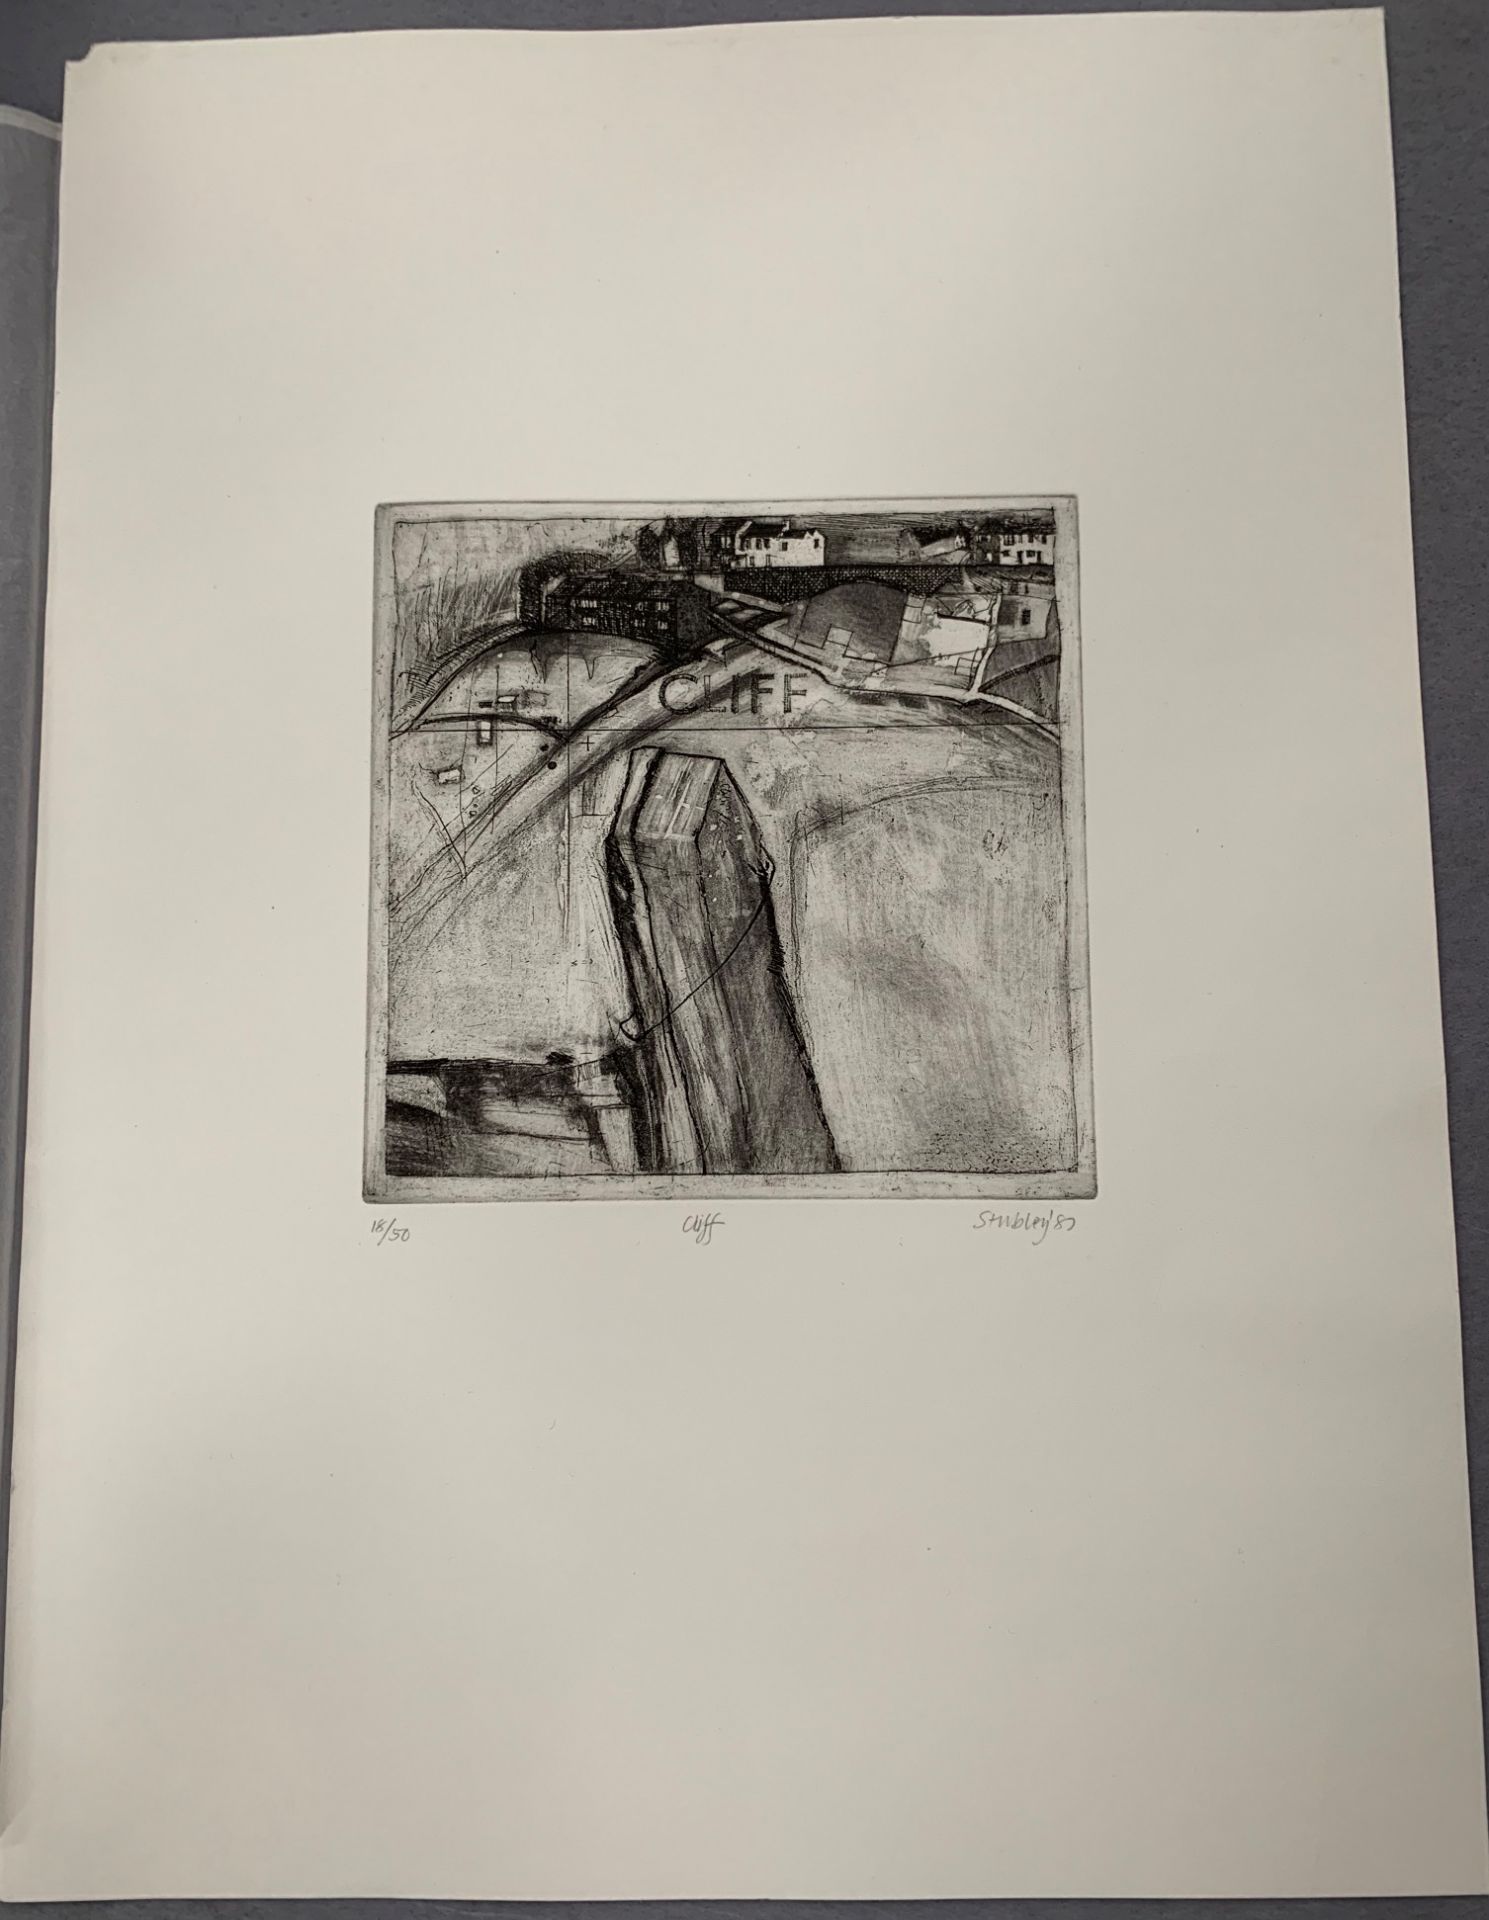 ARR - Trevor Stubley (1932-2010) unframed limited edition print 'Cliff' no.